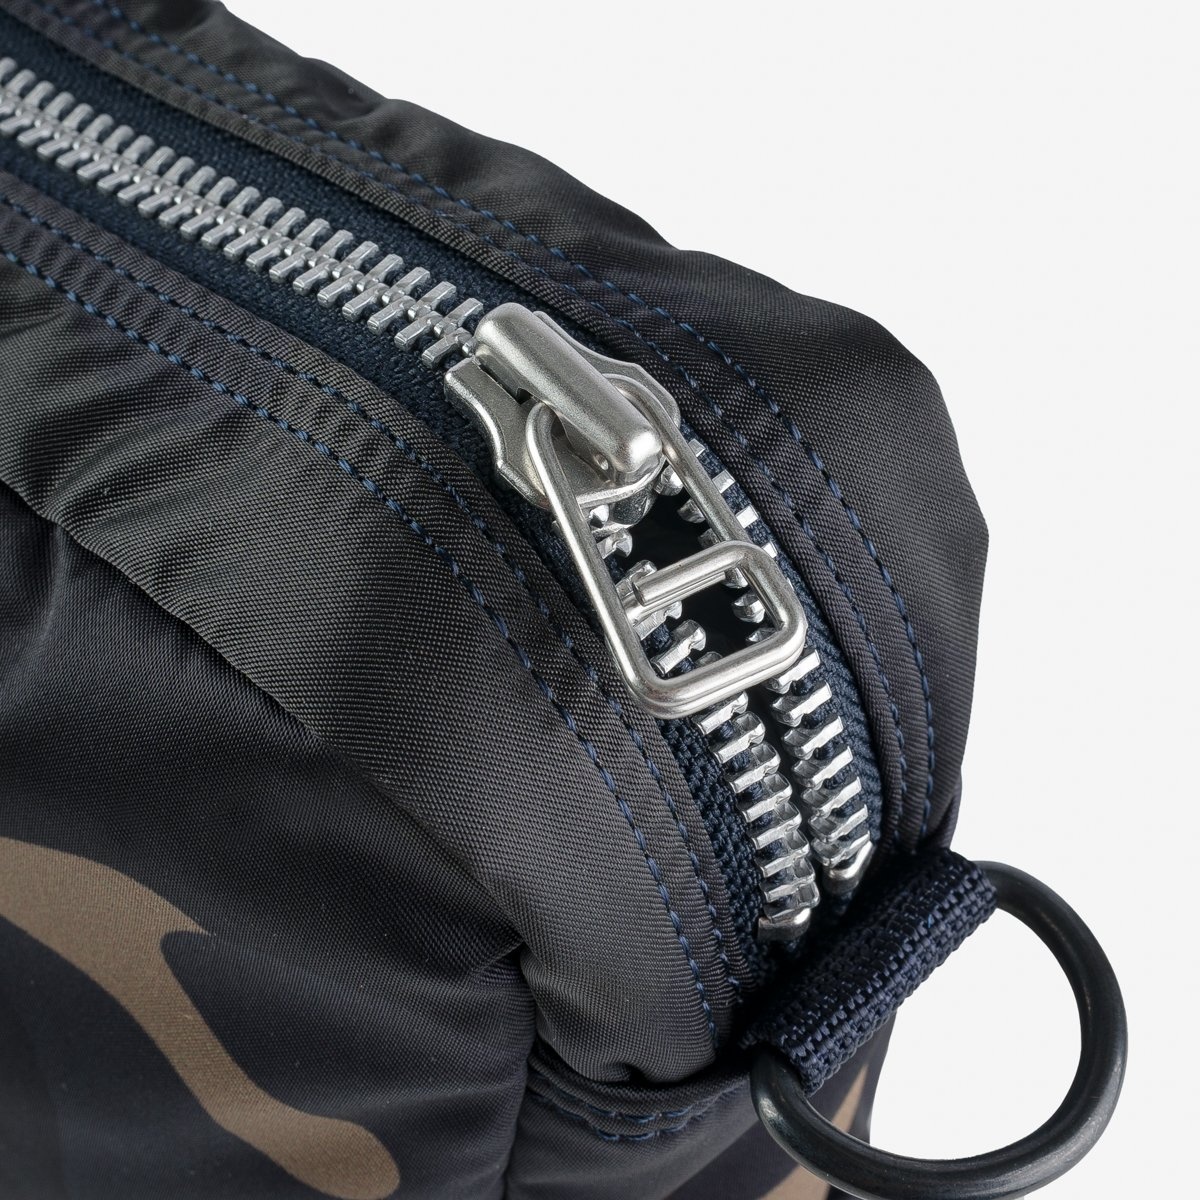 POR-SHLDR-CAM Porter - Yoshida & Co. - Counter Shade Shoulder Bag - Camo - 10